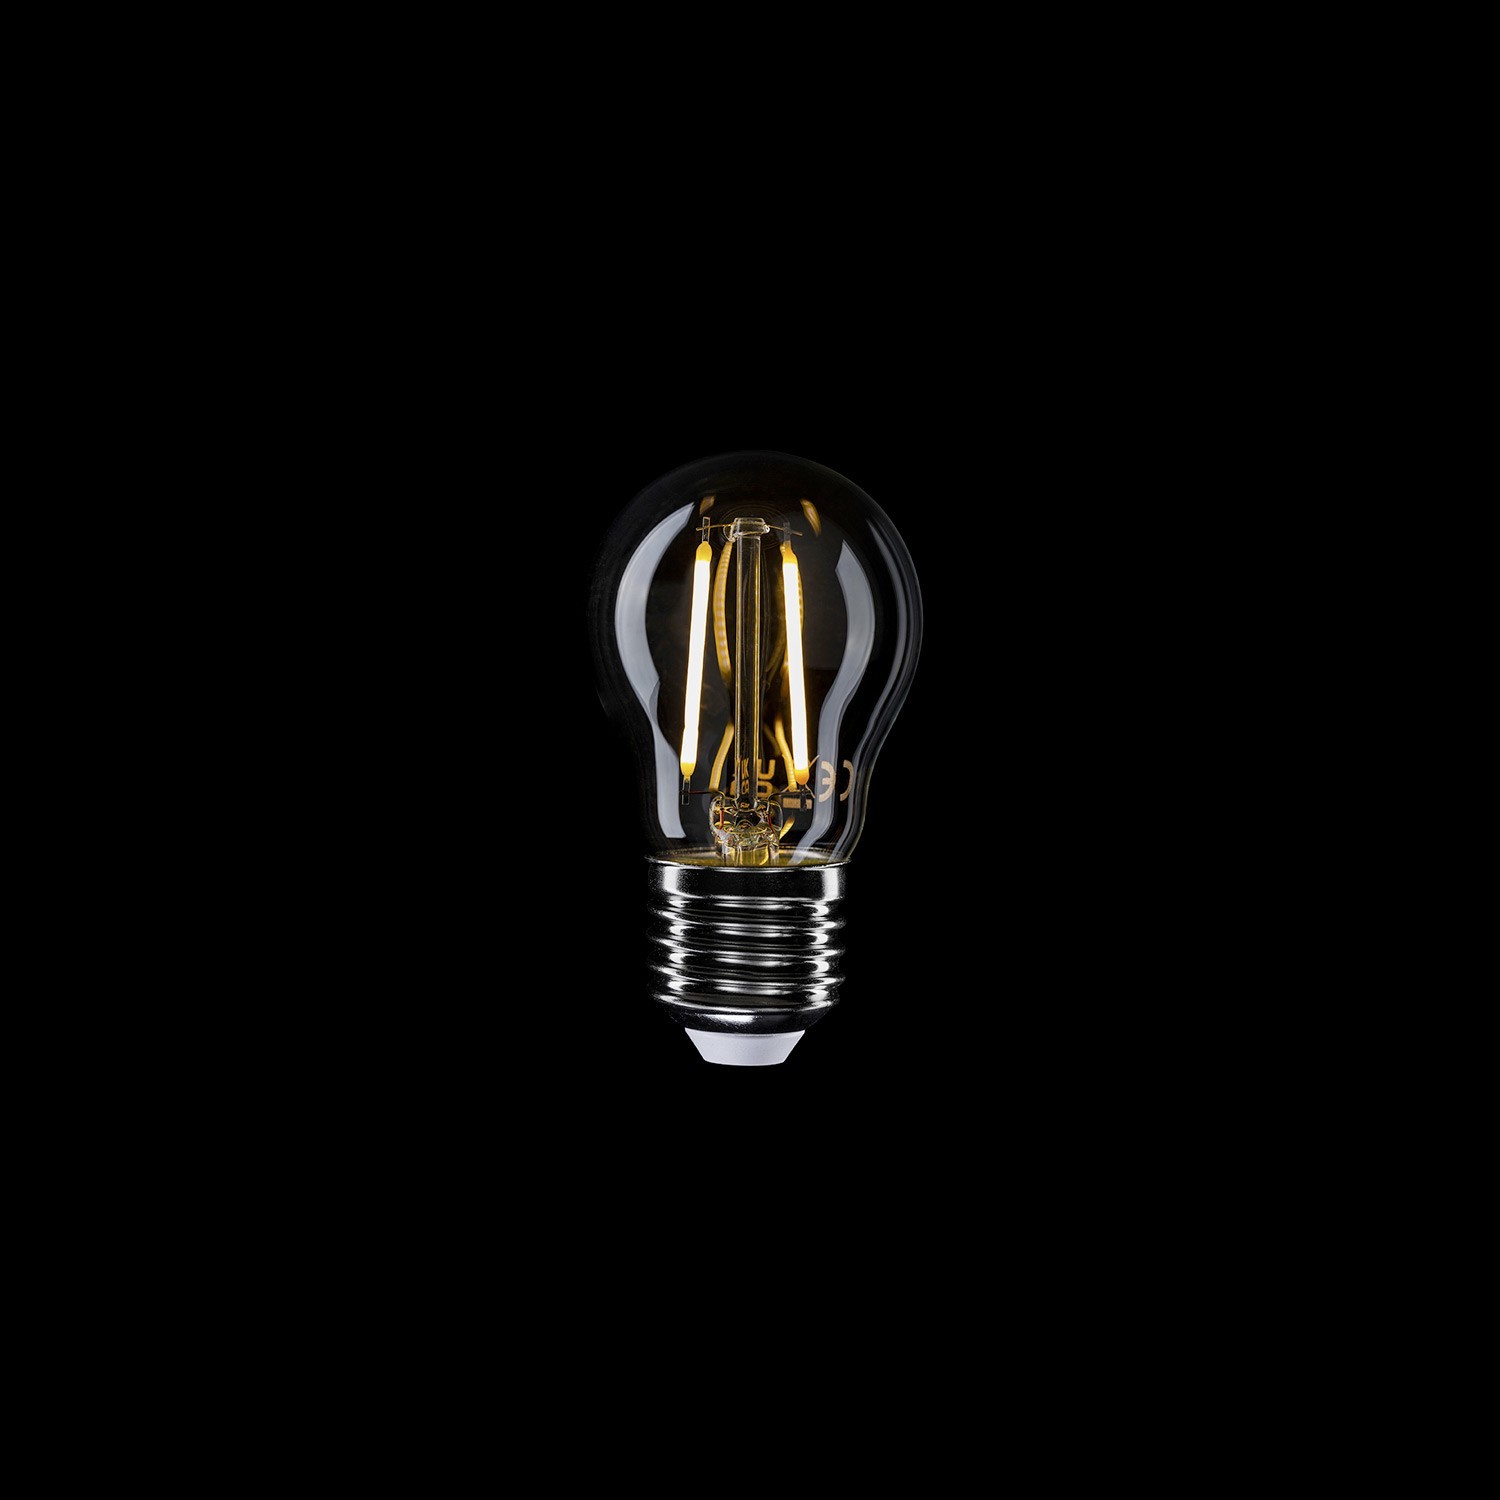 Lampadina LED Trasparente Globetta G45 2W 136Lm E27 2700K - E08